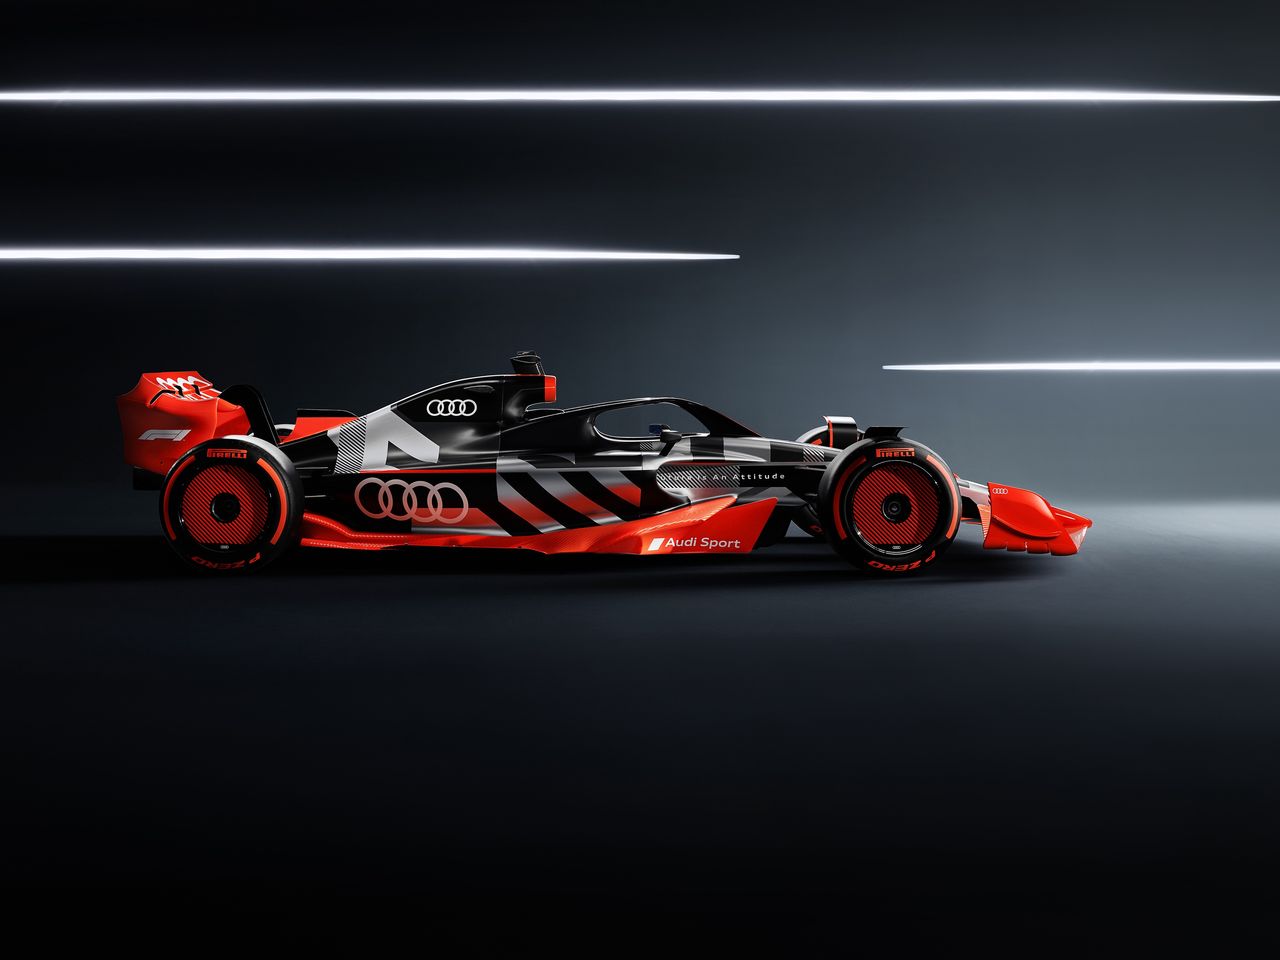 Showcar with Audi F1 